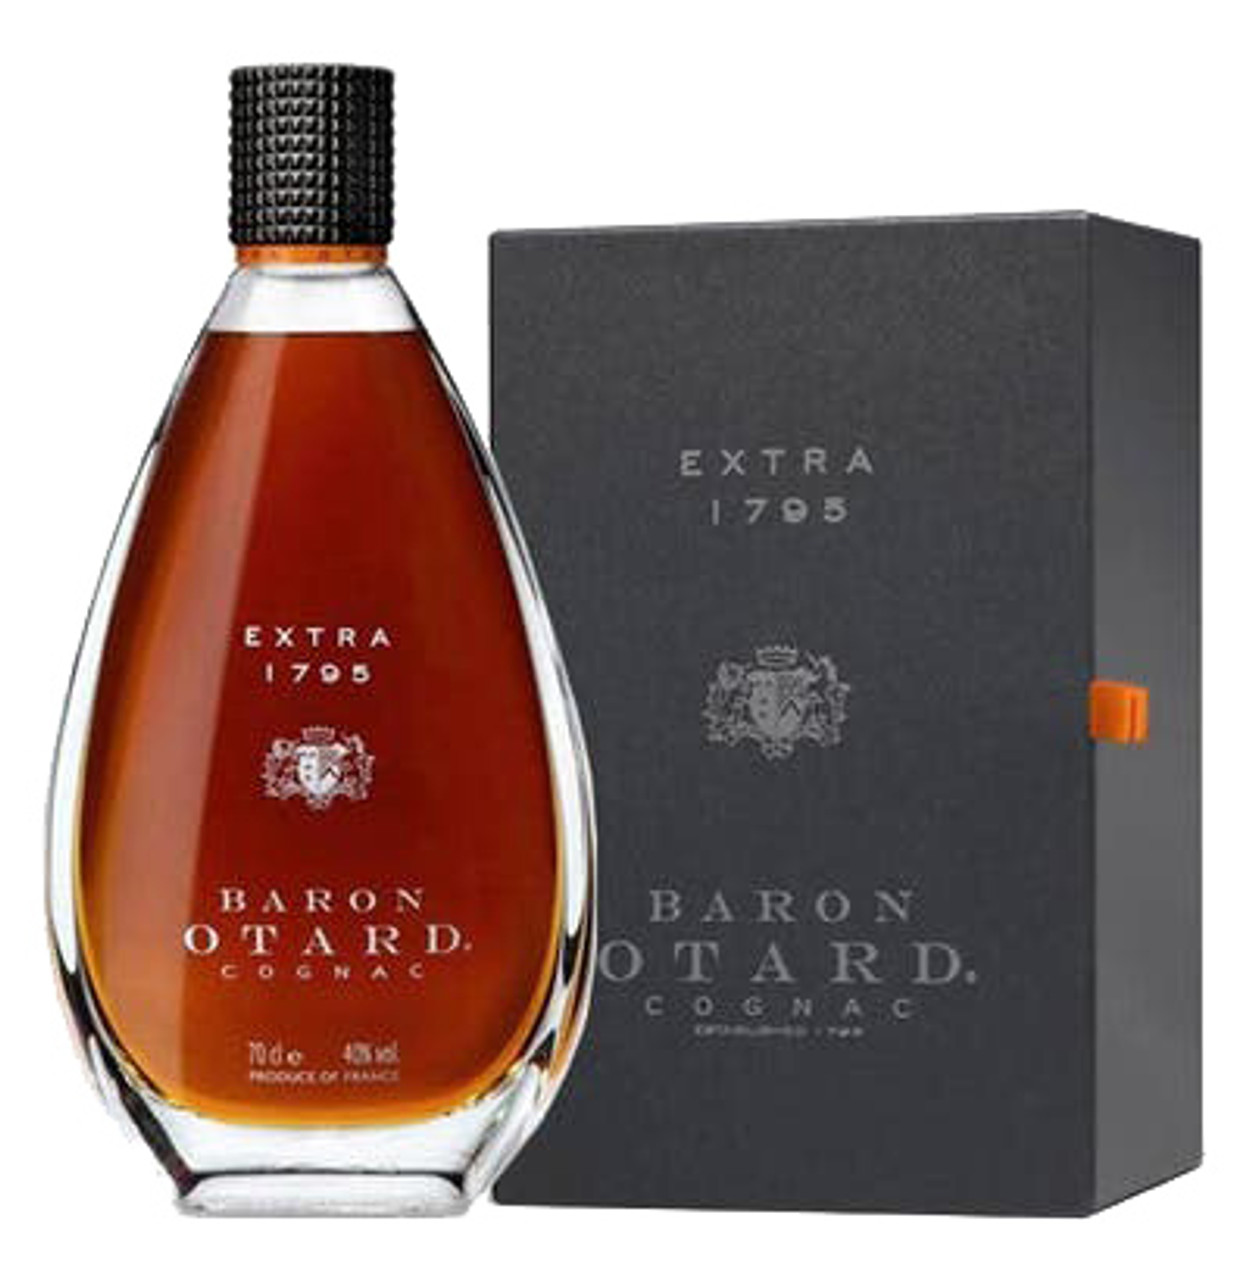 Baron Otard Extra 1795 Cognac 700ml